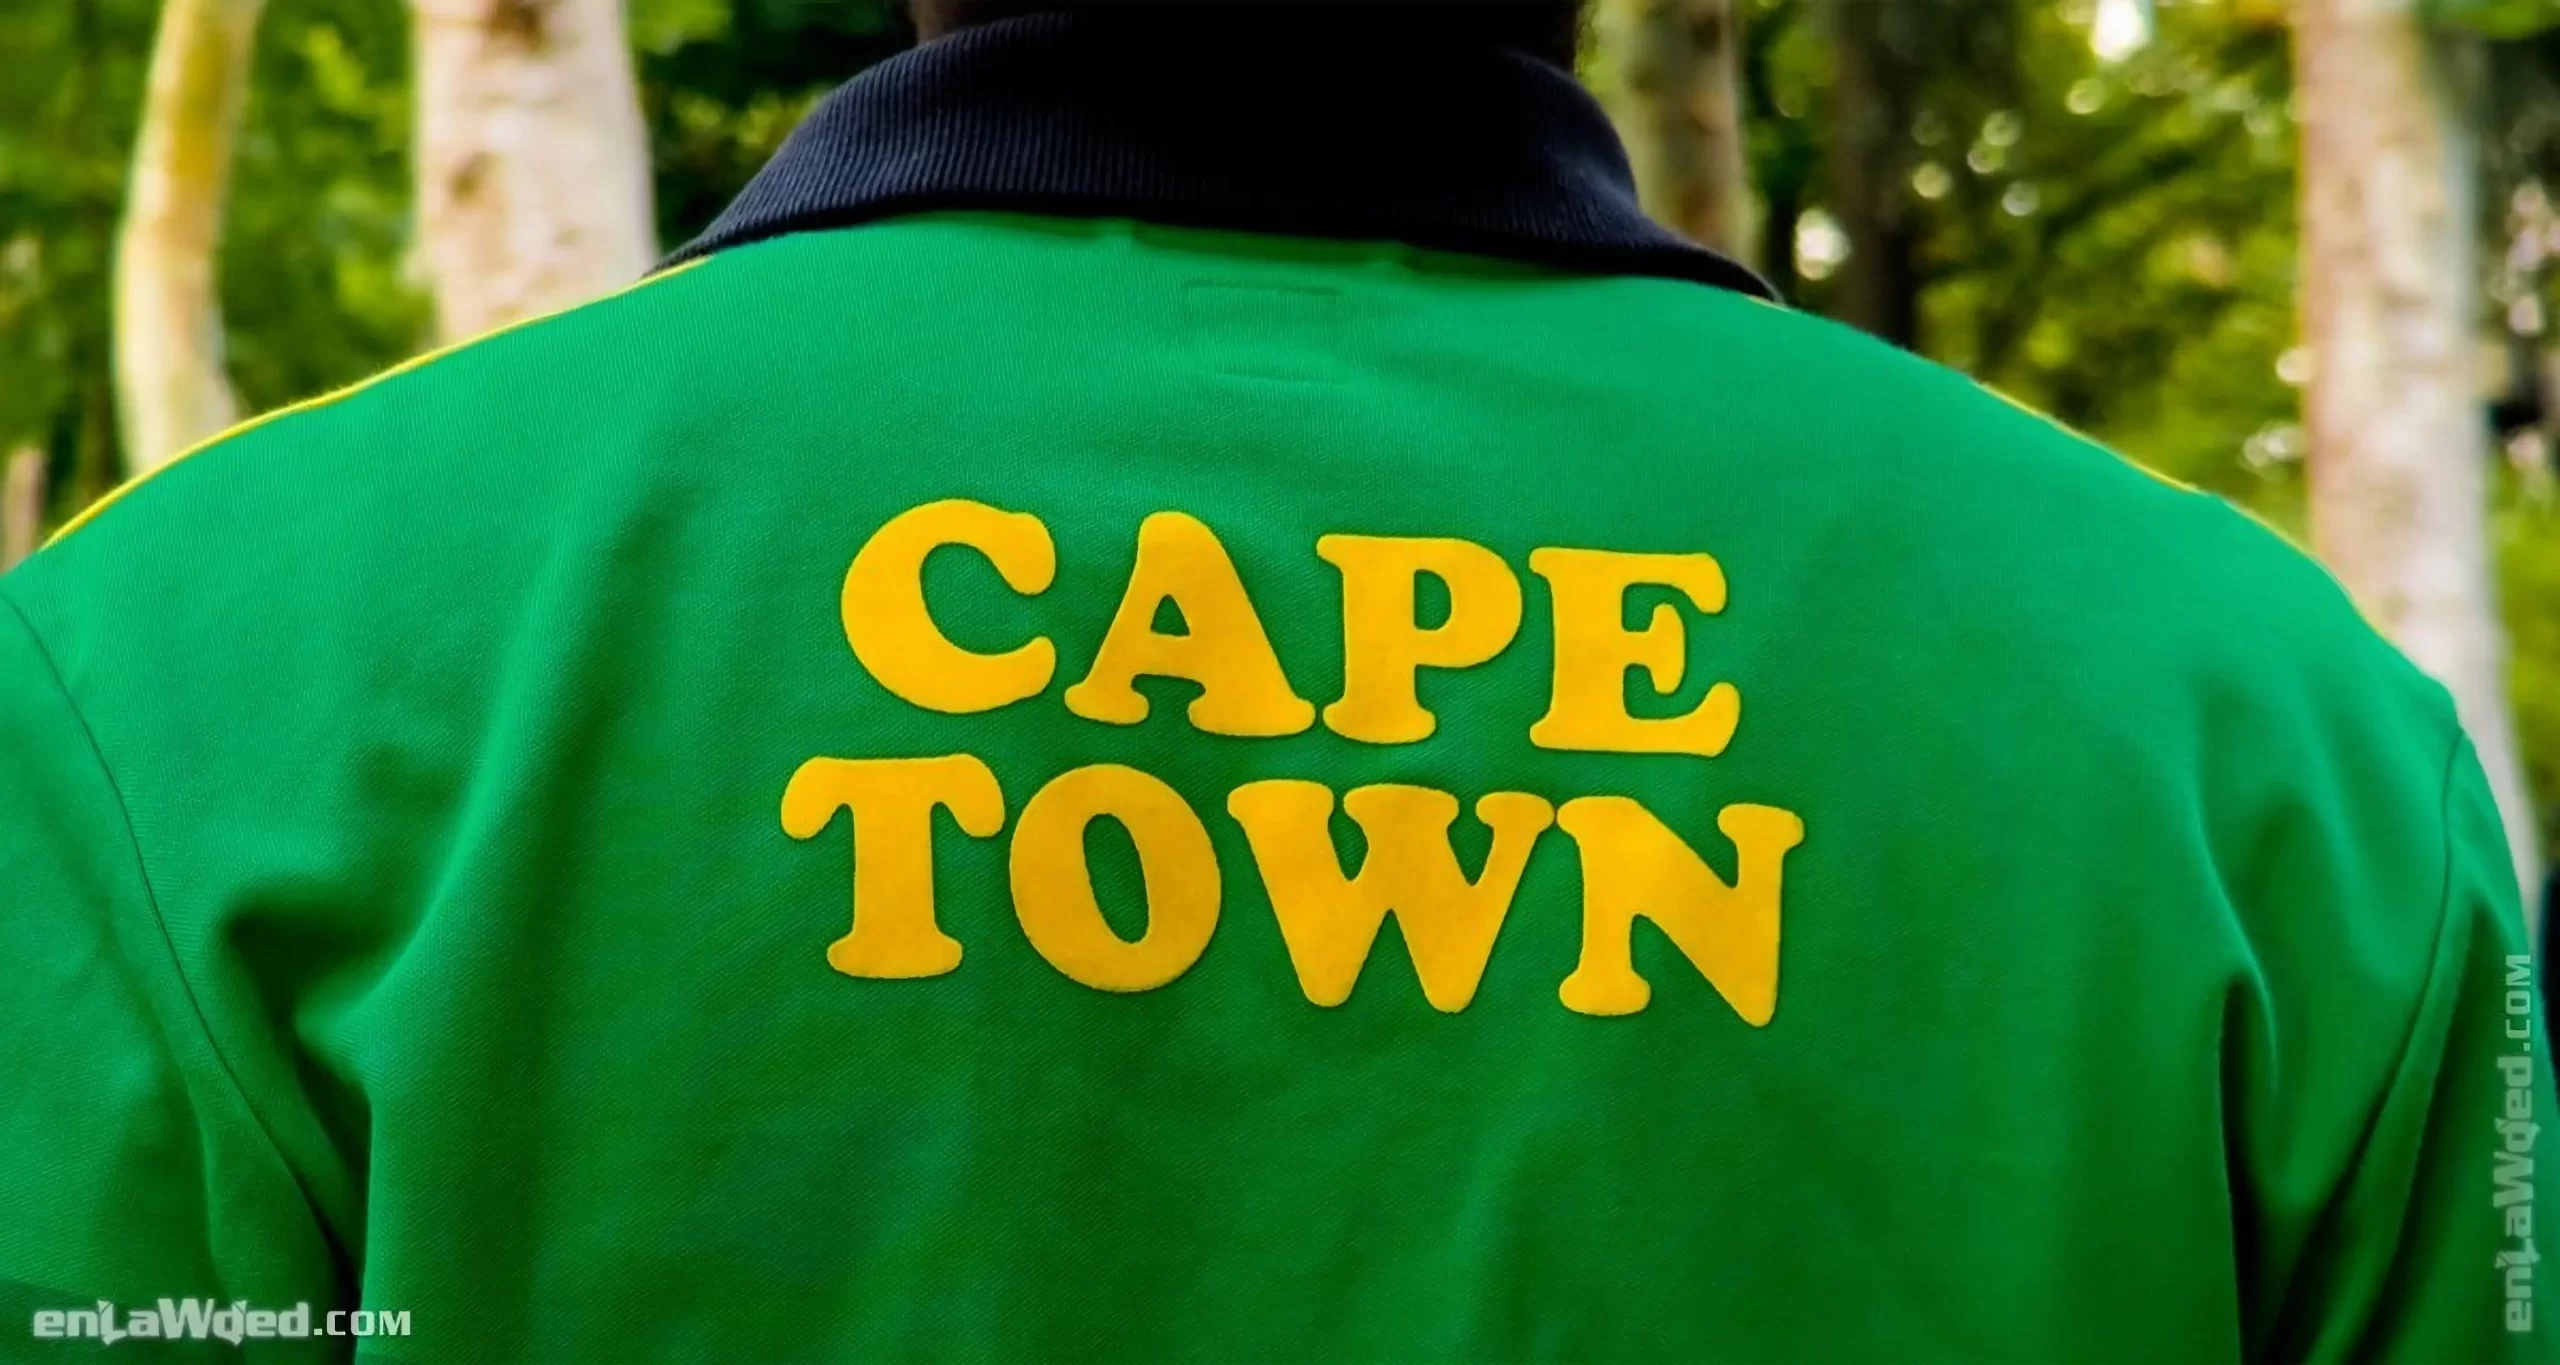 Men’s 2006 Cape Town TT by Adidas Originals: Passionate (EnLawded.com file #lmchk90457ip2y122275kg9st)